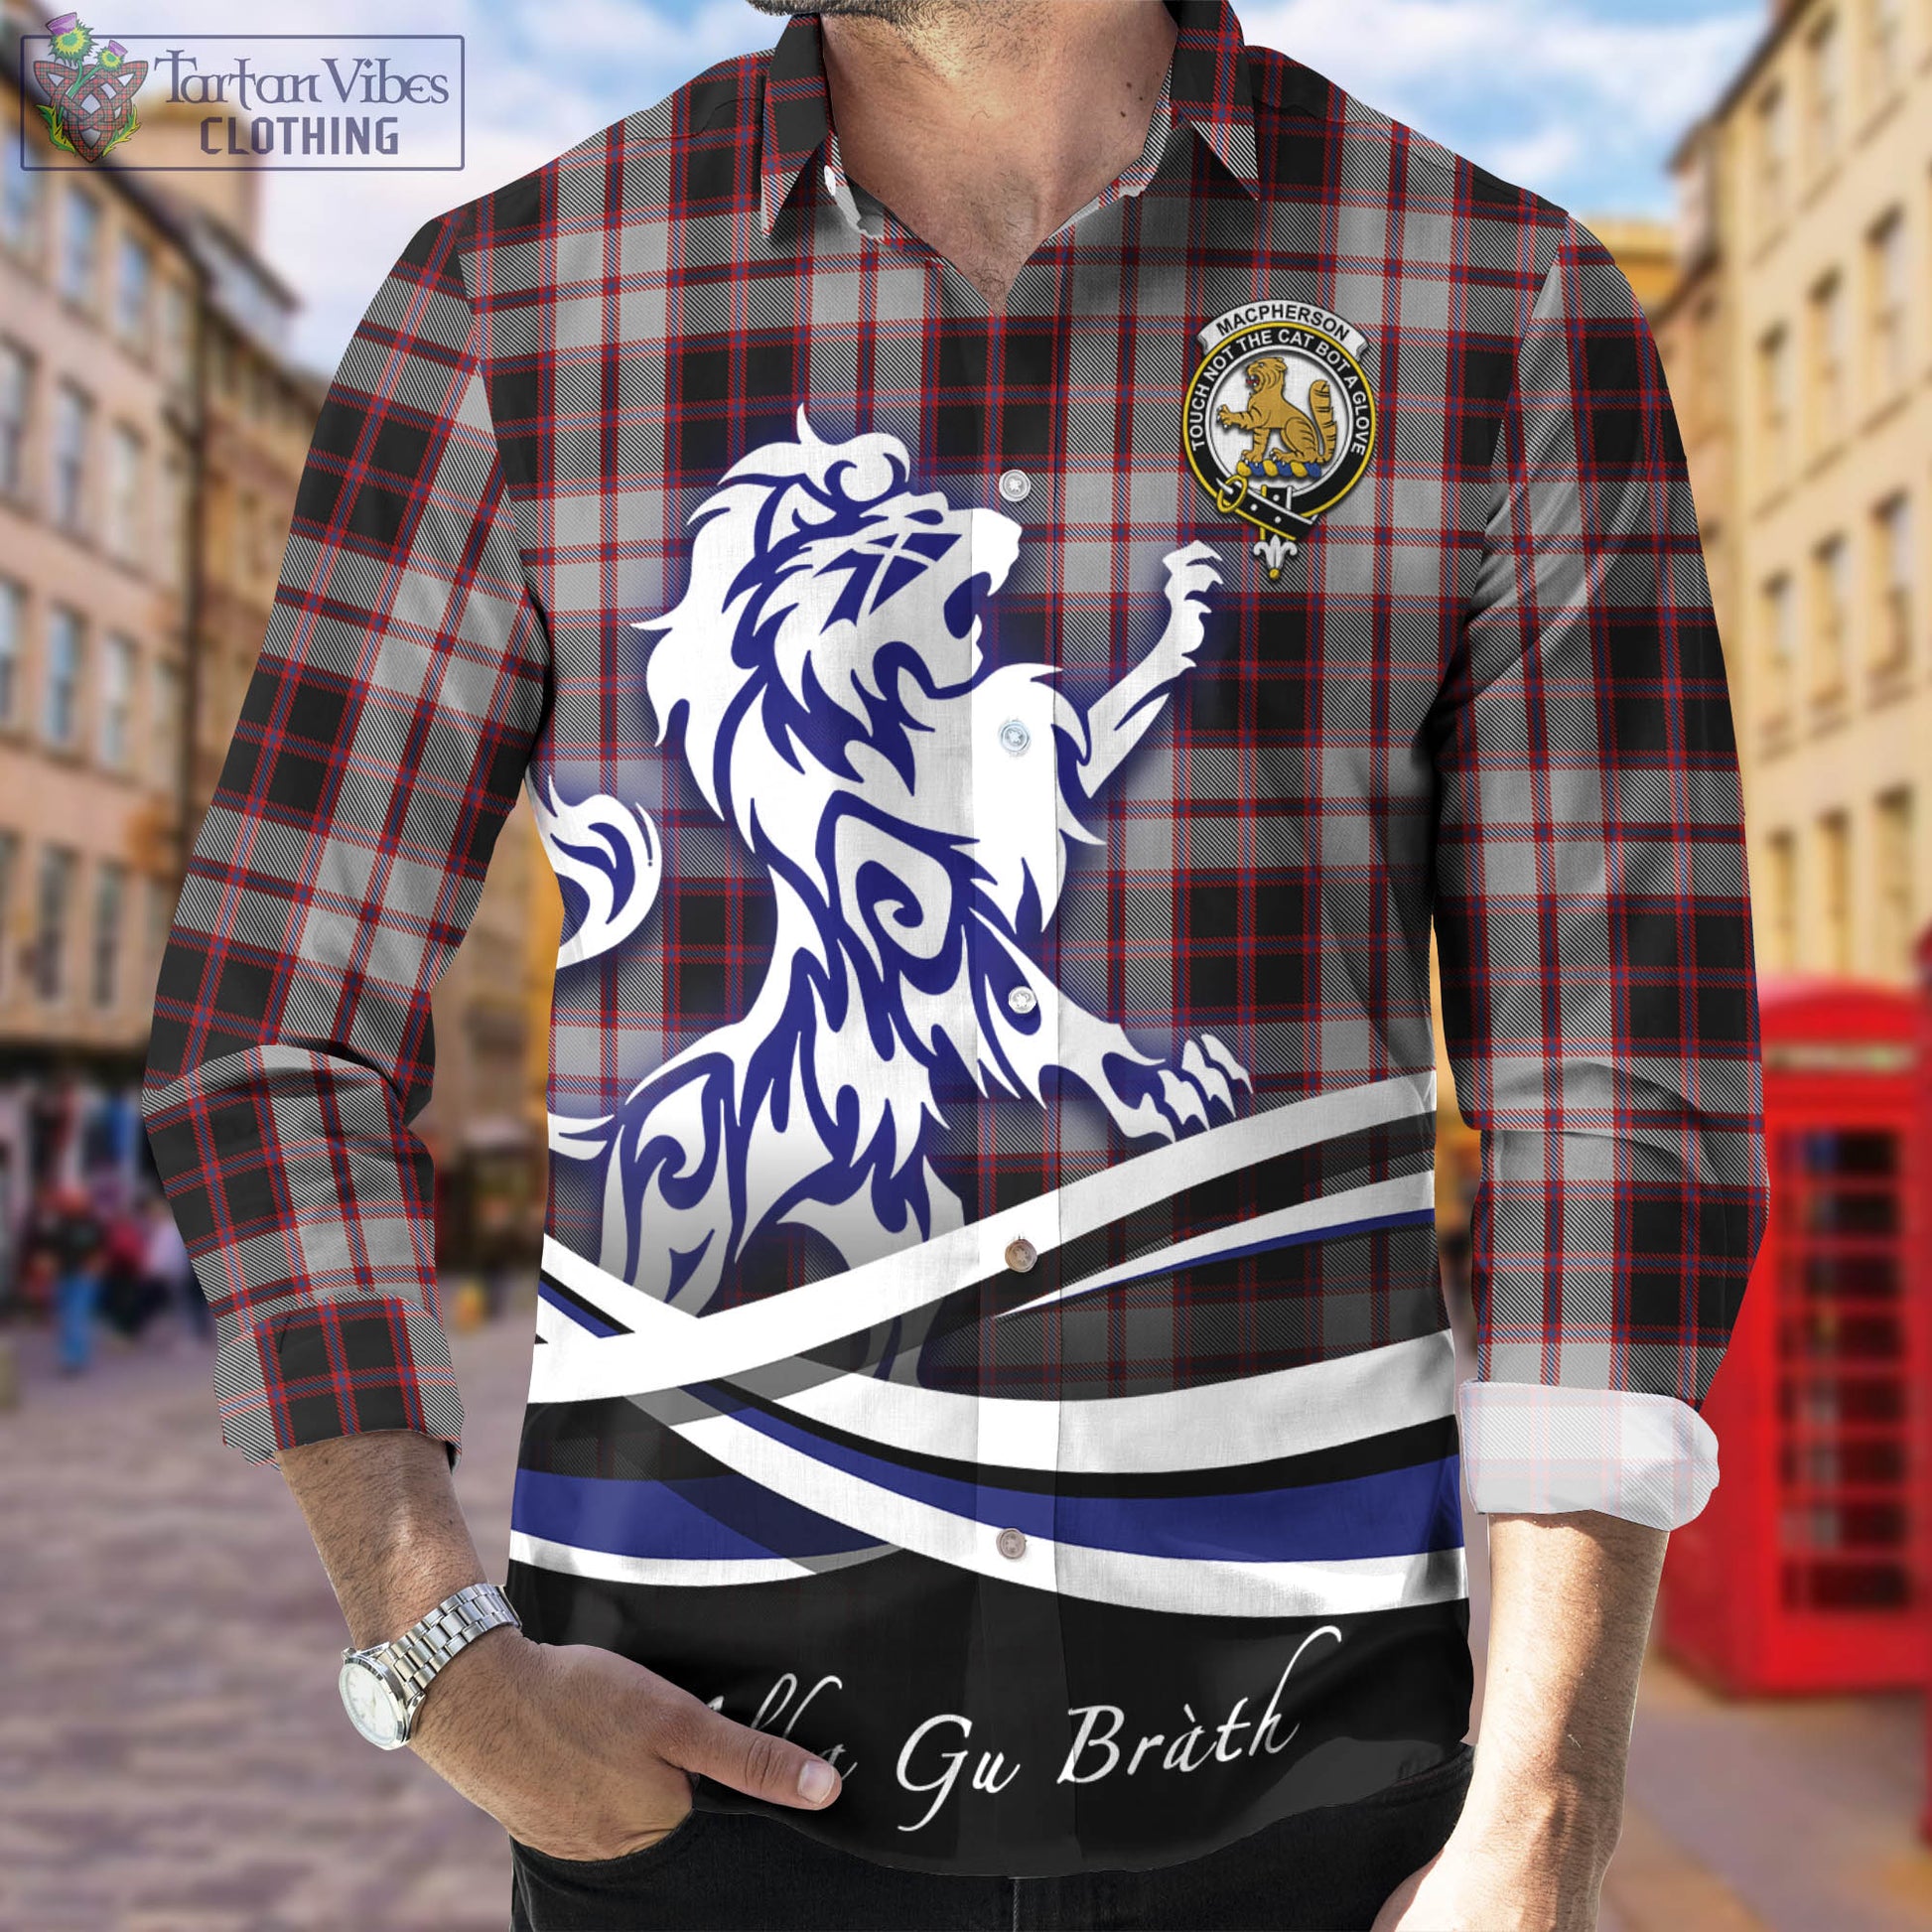 macpherson-tartan-long-sleeve-button-up-shirt-with-alba-gu-brath-regal-lion-emblem